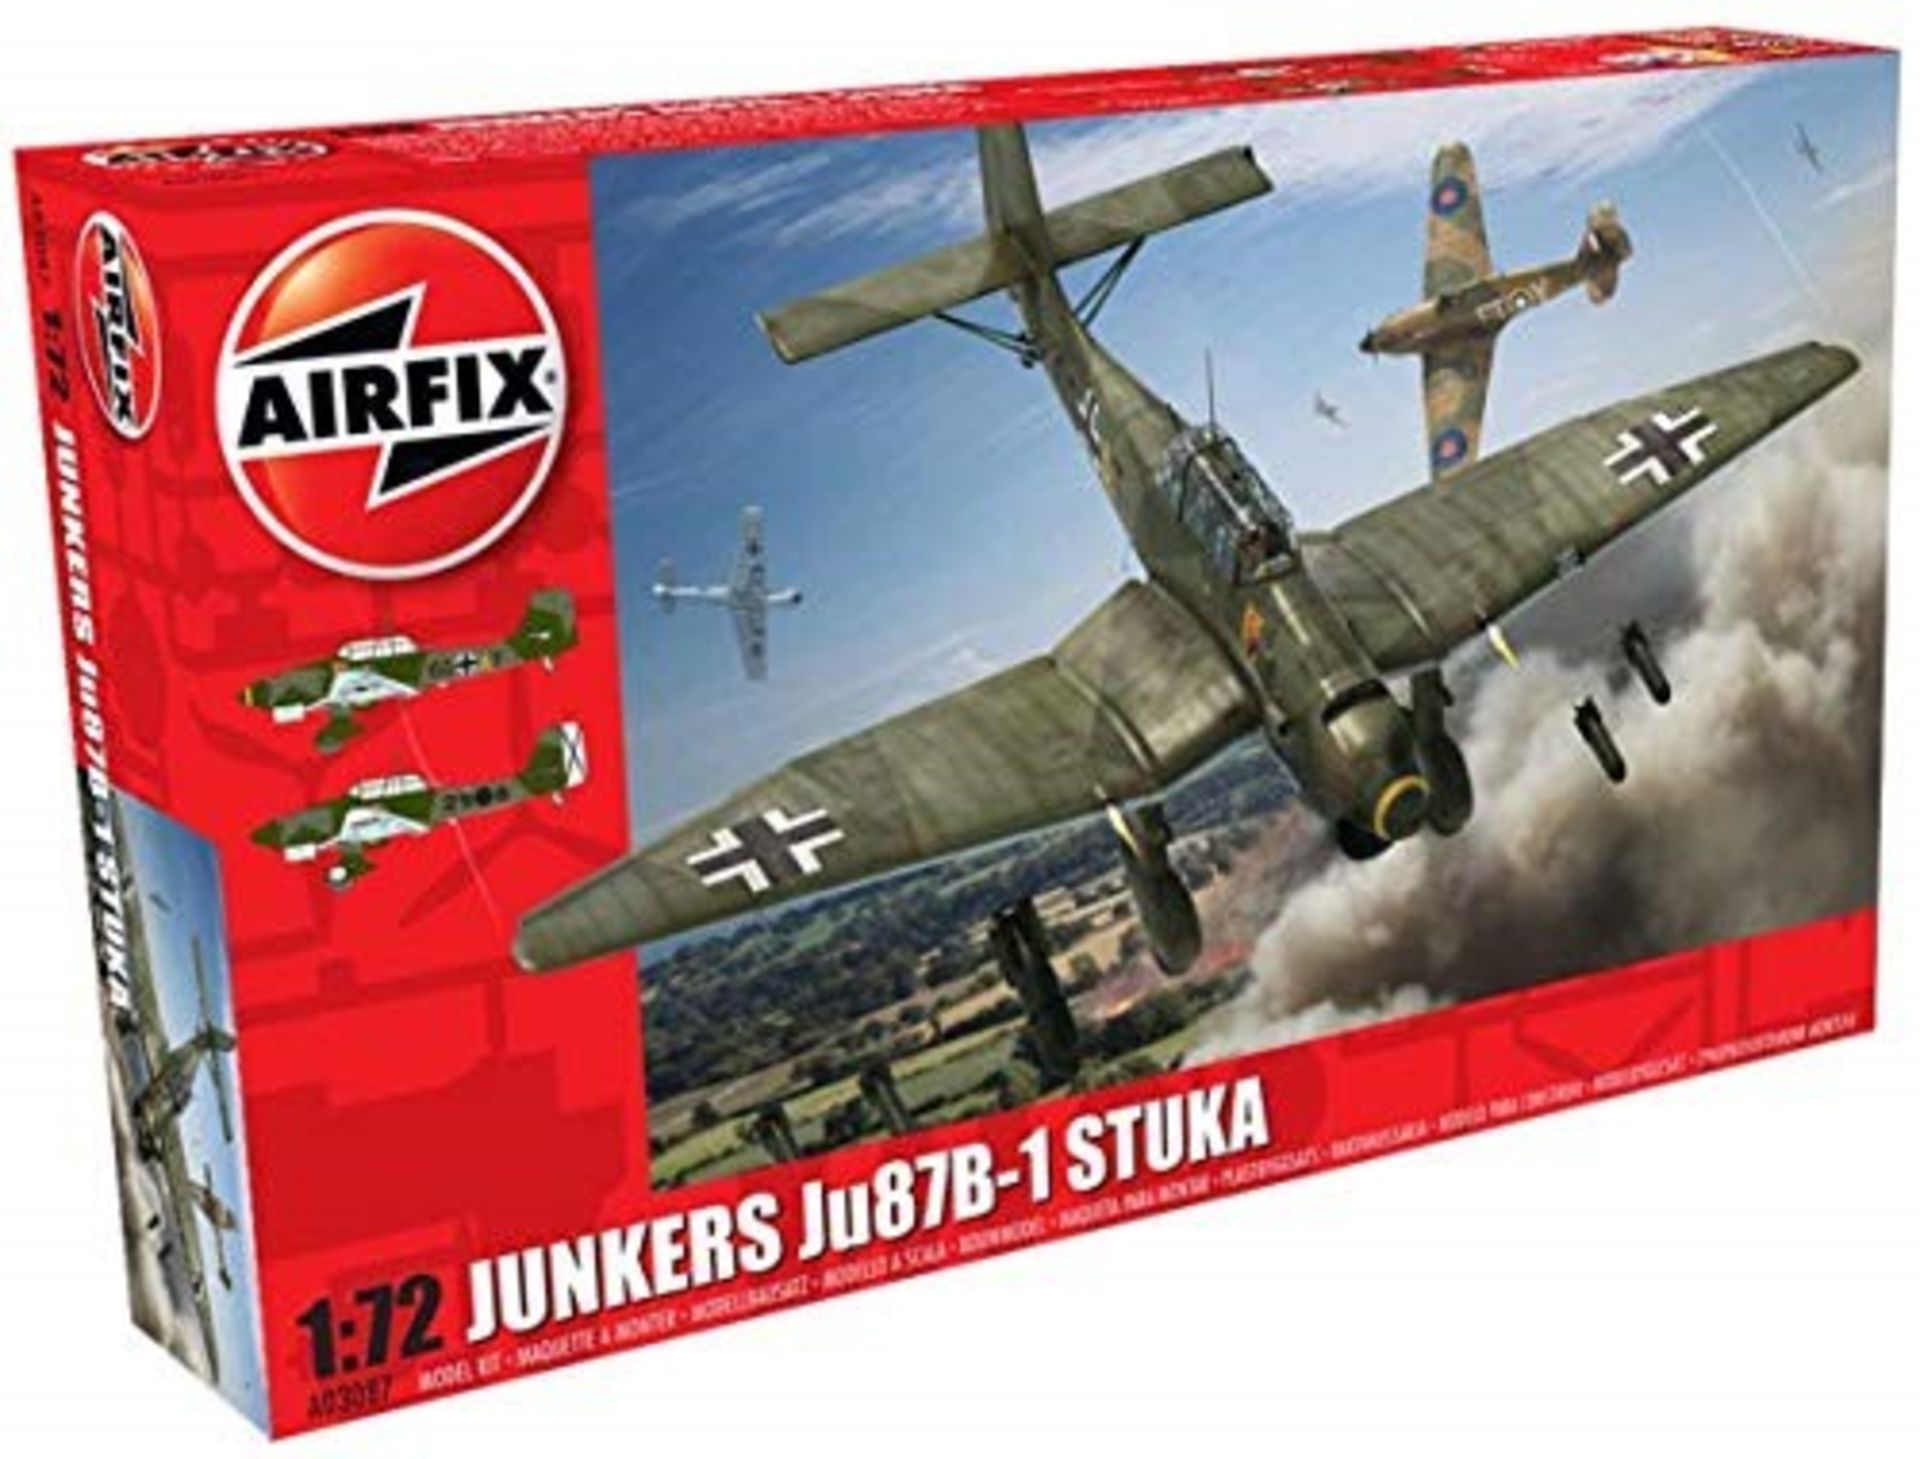 Airfix 1:72 Scale Junkers Ju87 B-1 Stuka Model Kit